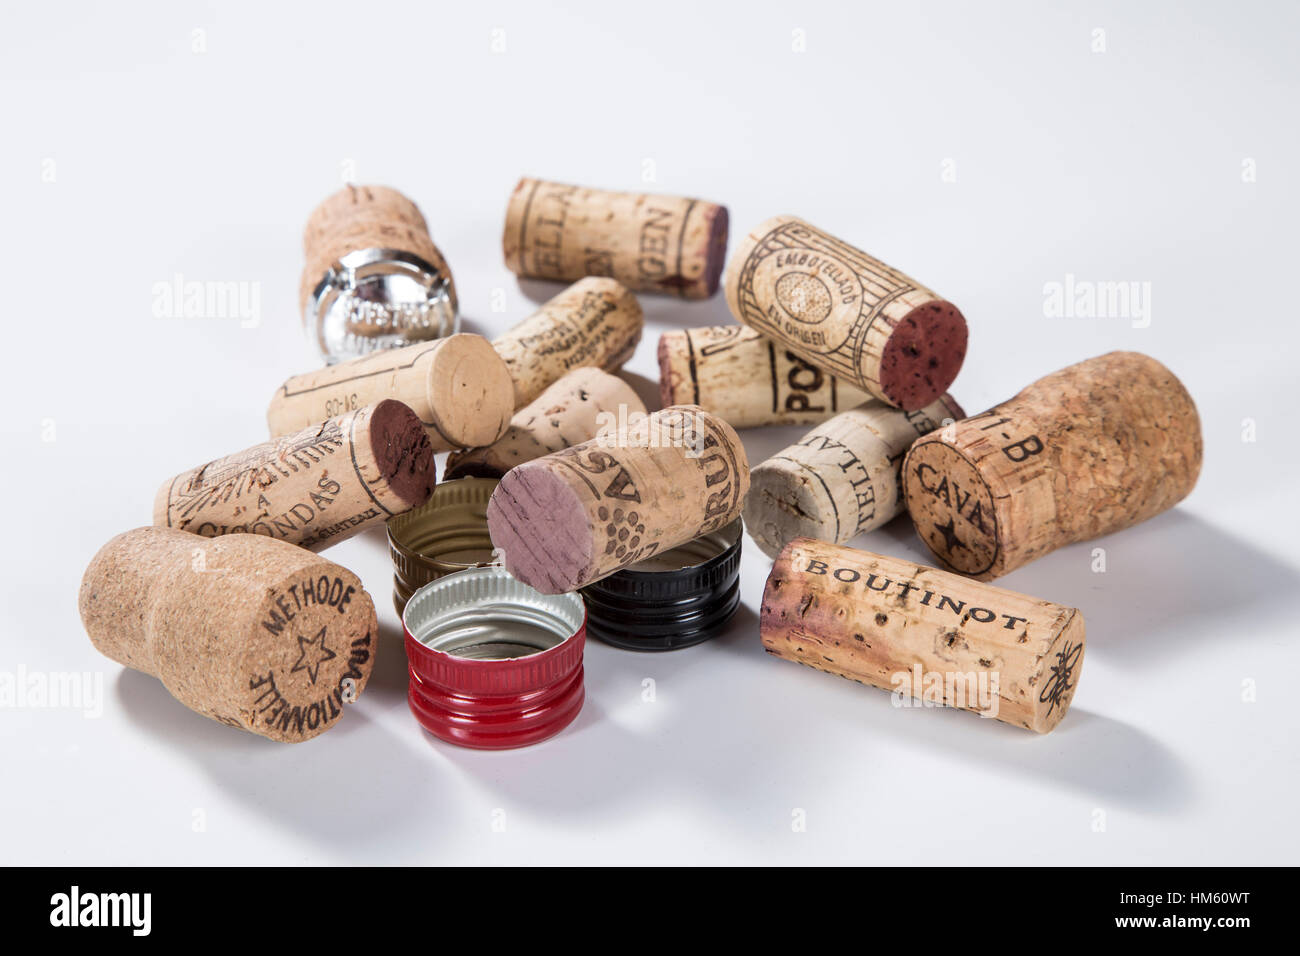 Groups of Wine bottle Corks Stock Photo